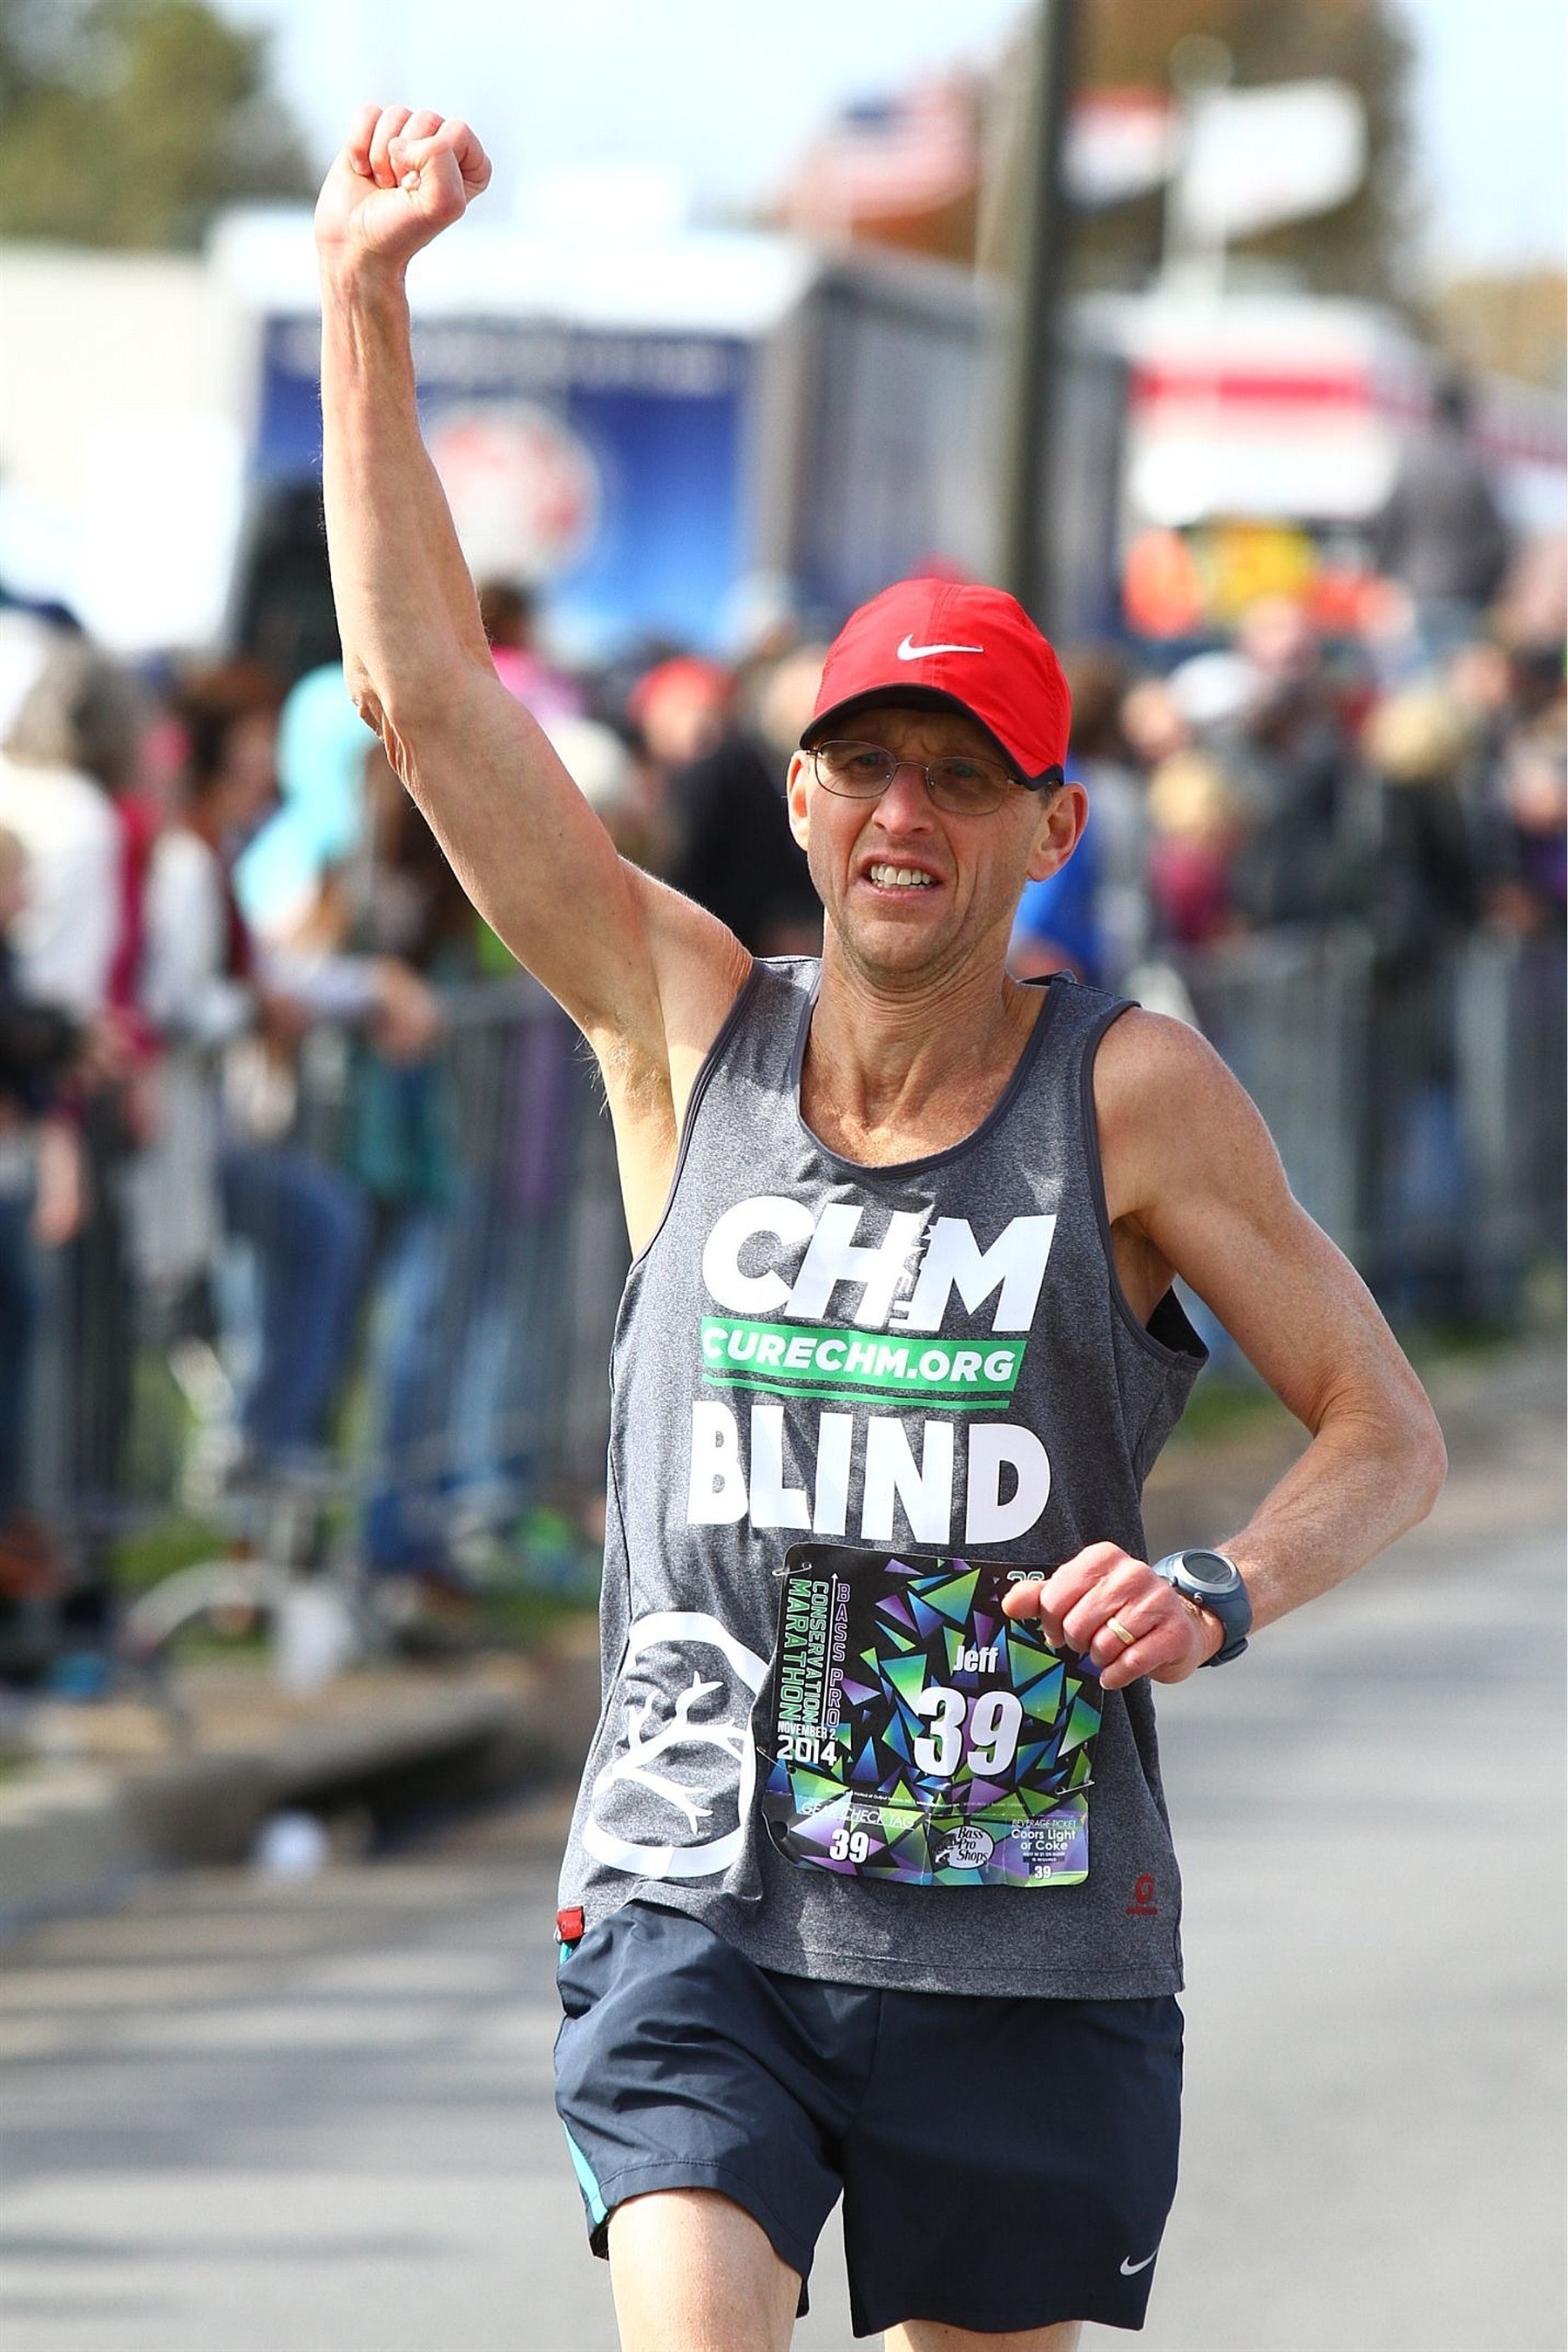 Jeff Benelli - Blind Marathoner with CHM